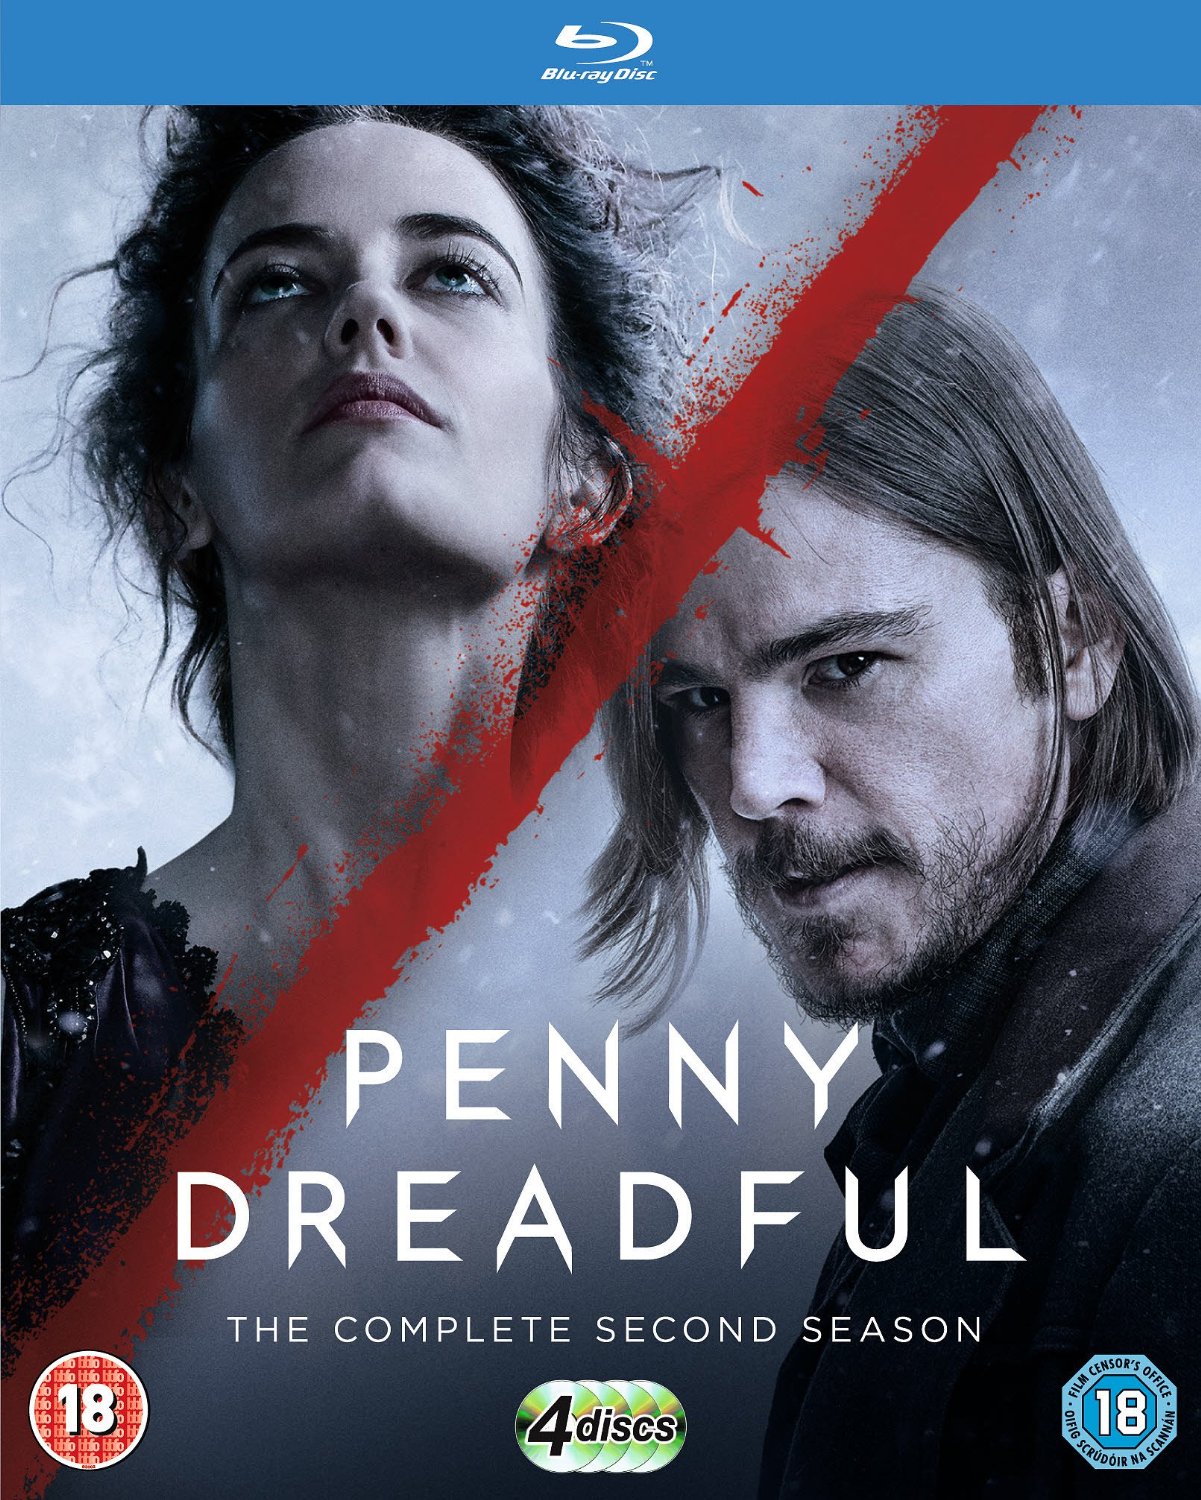 Penny Dreadful Season 2 Blu-ray review